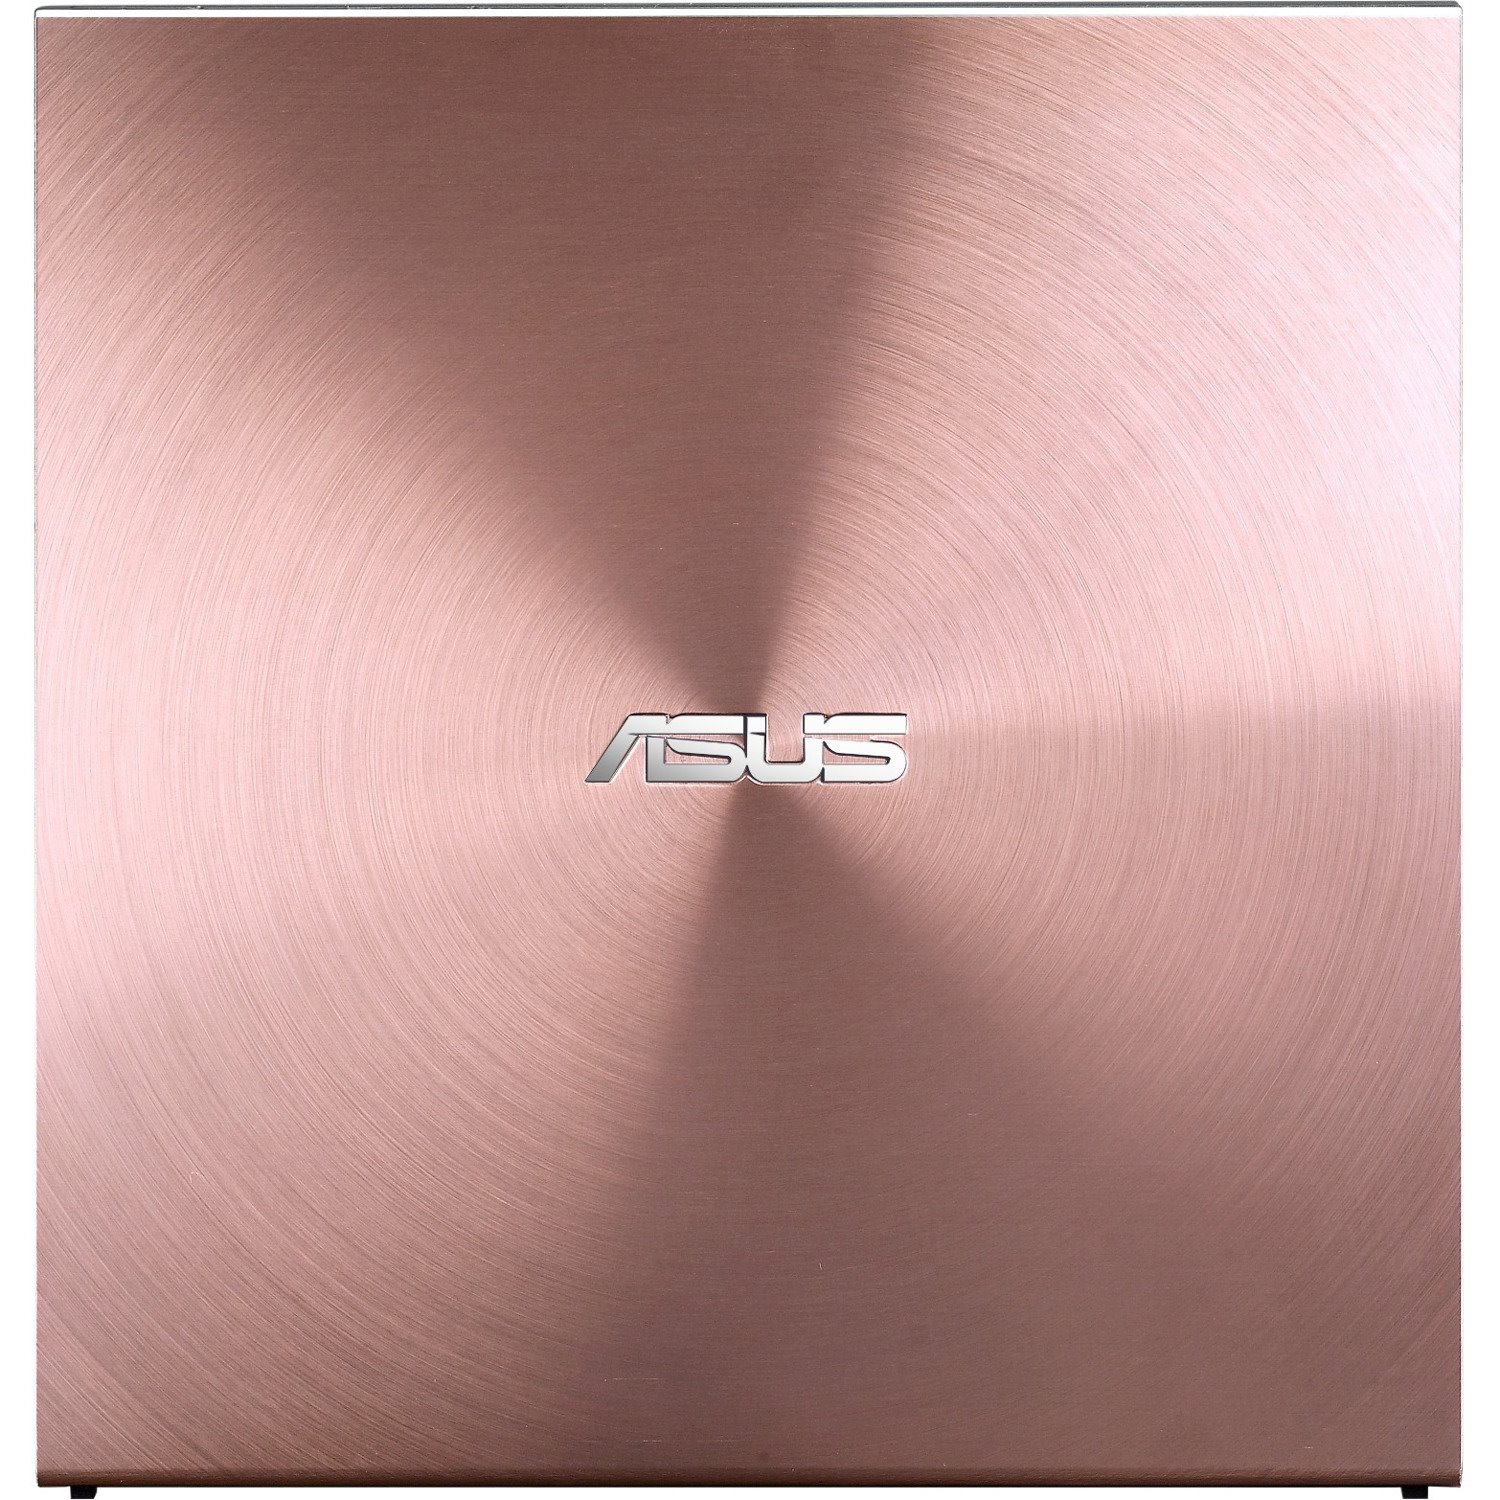 Asus SDRW-08U5S-U DVD-Writer - External - 1 x Pack - Pink